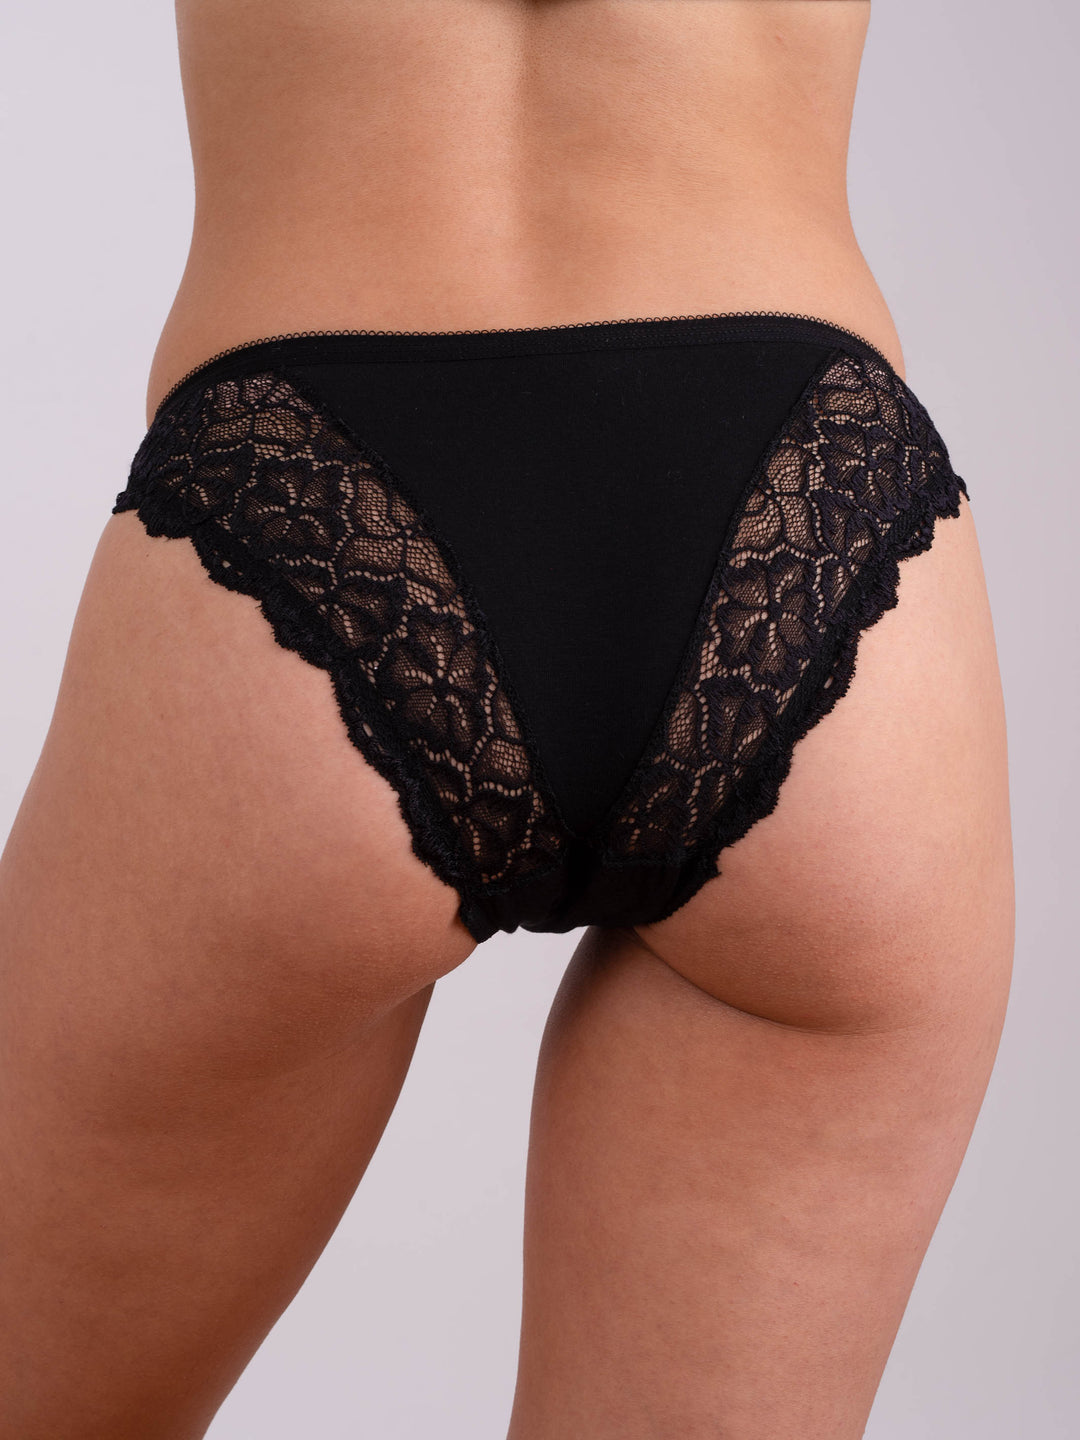 Cotton panty with lace back - Black - (202-black)